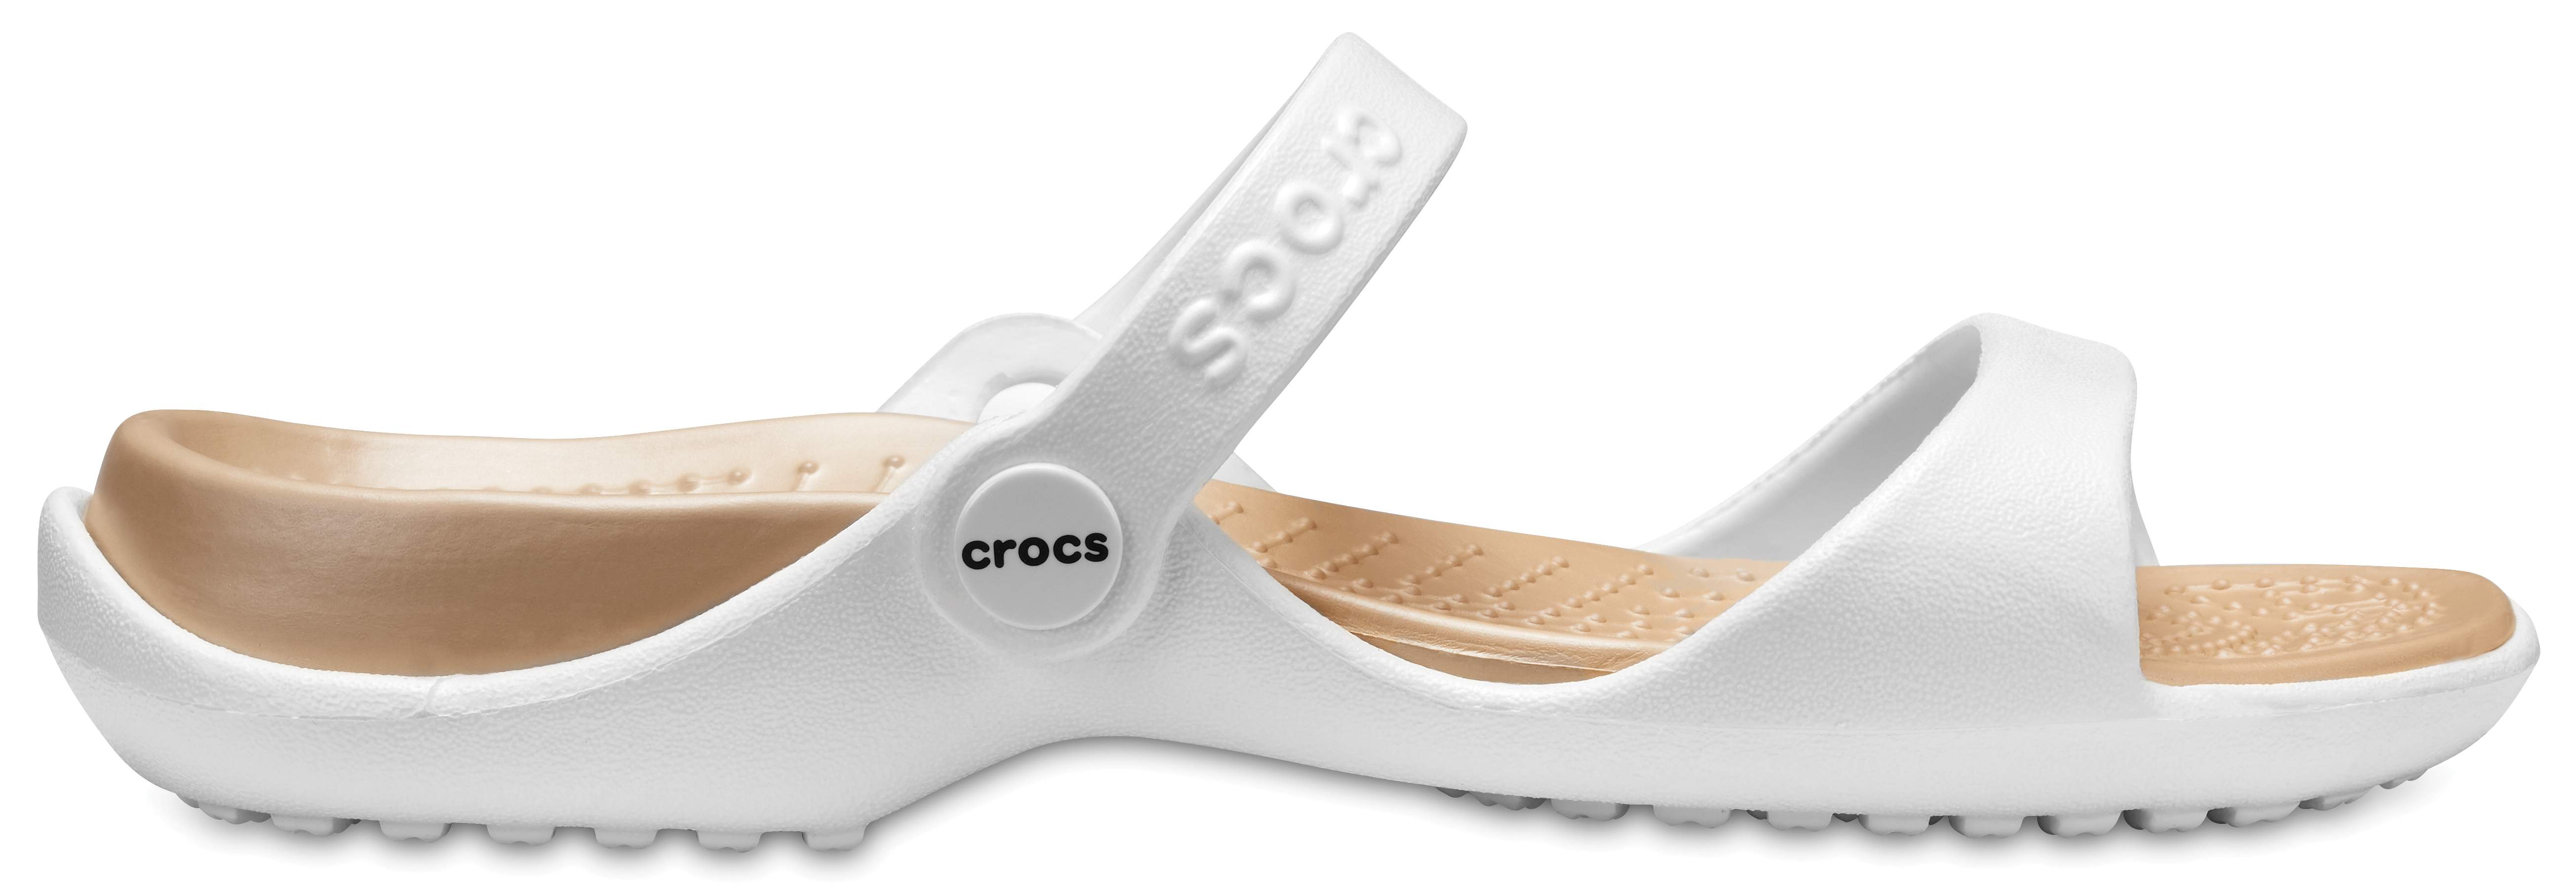 cleo crocs size 8